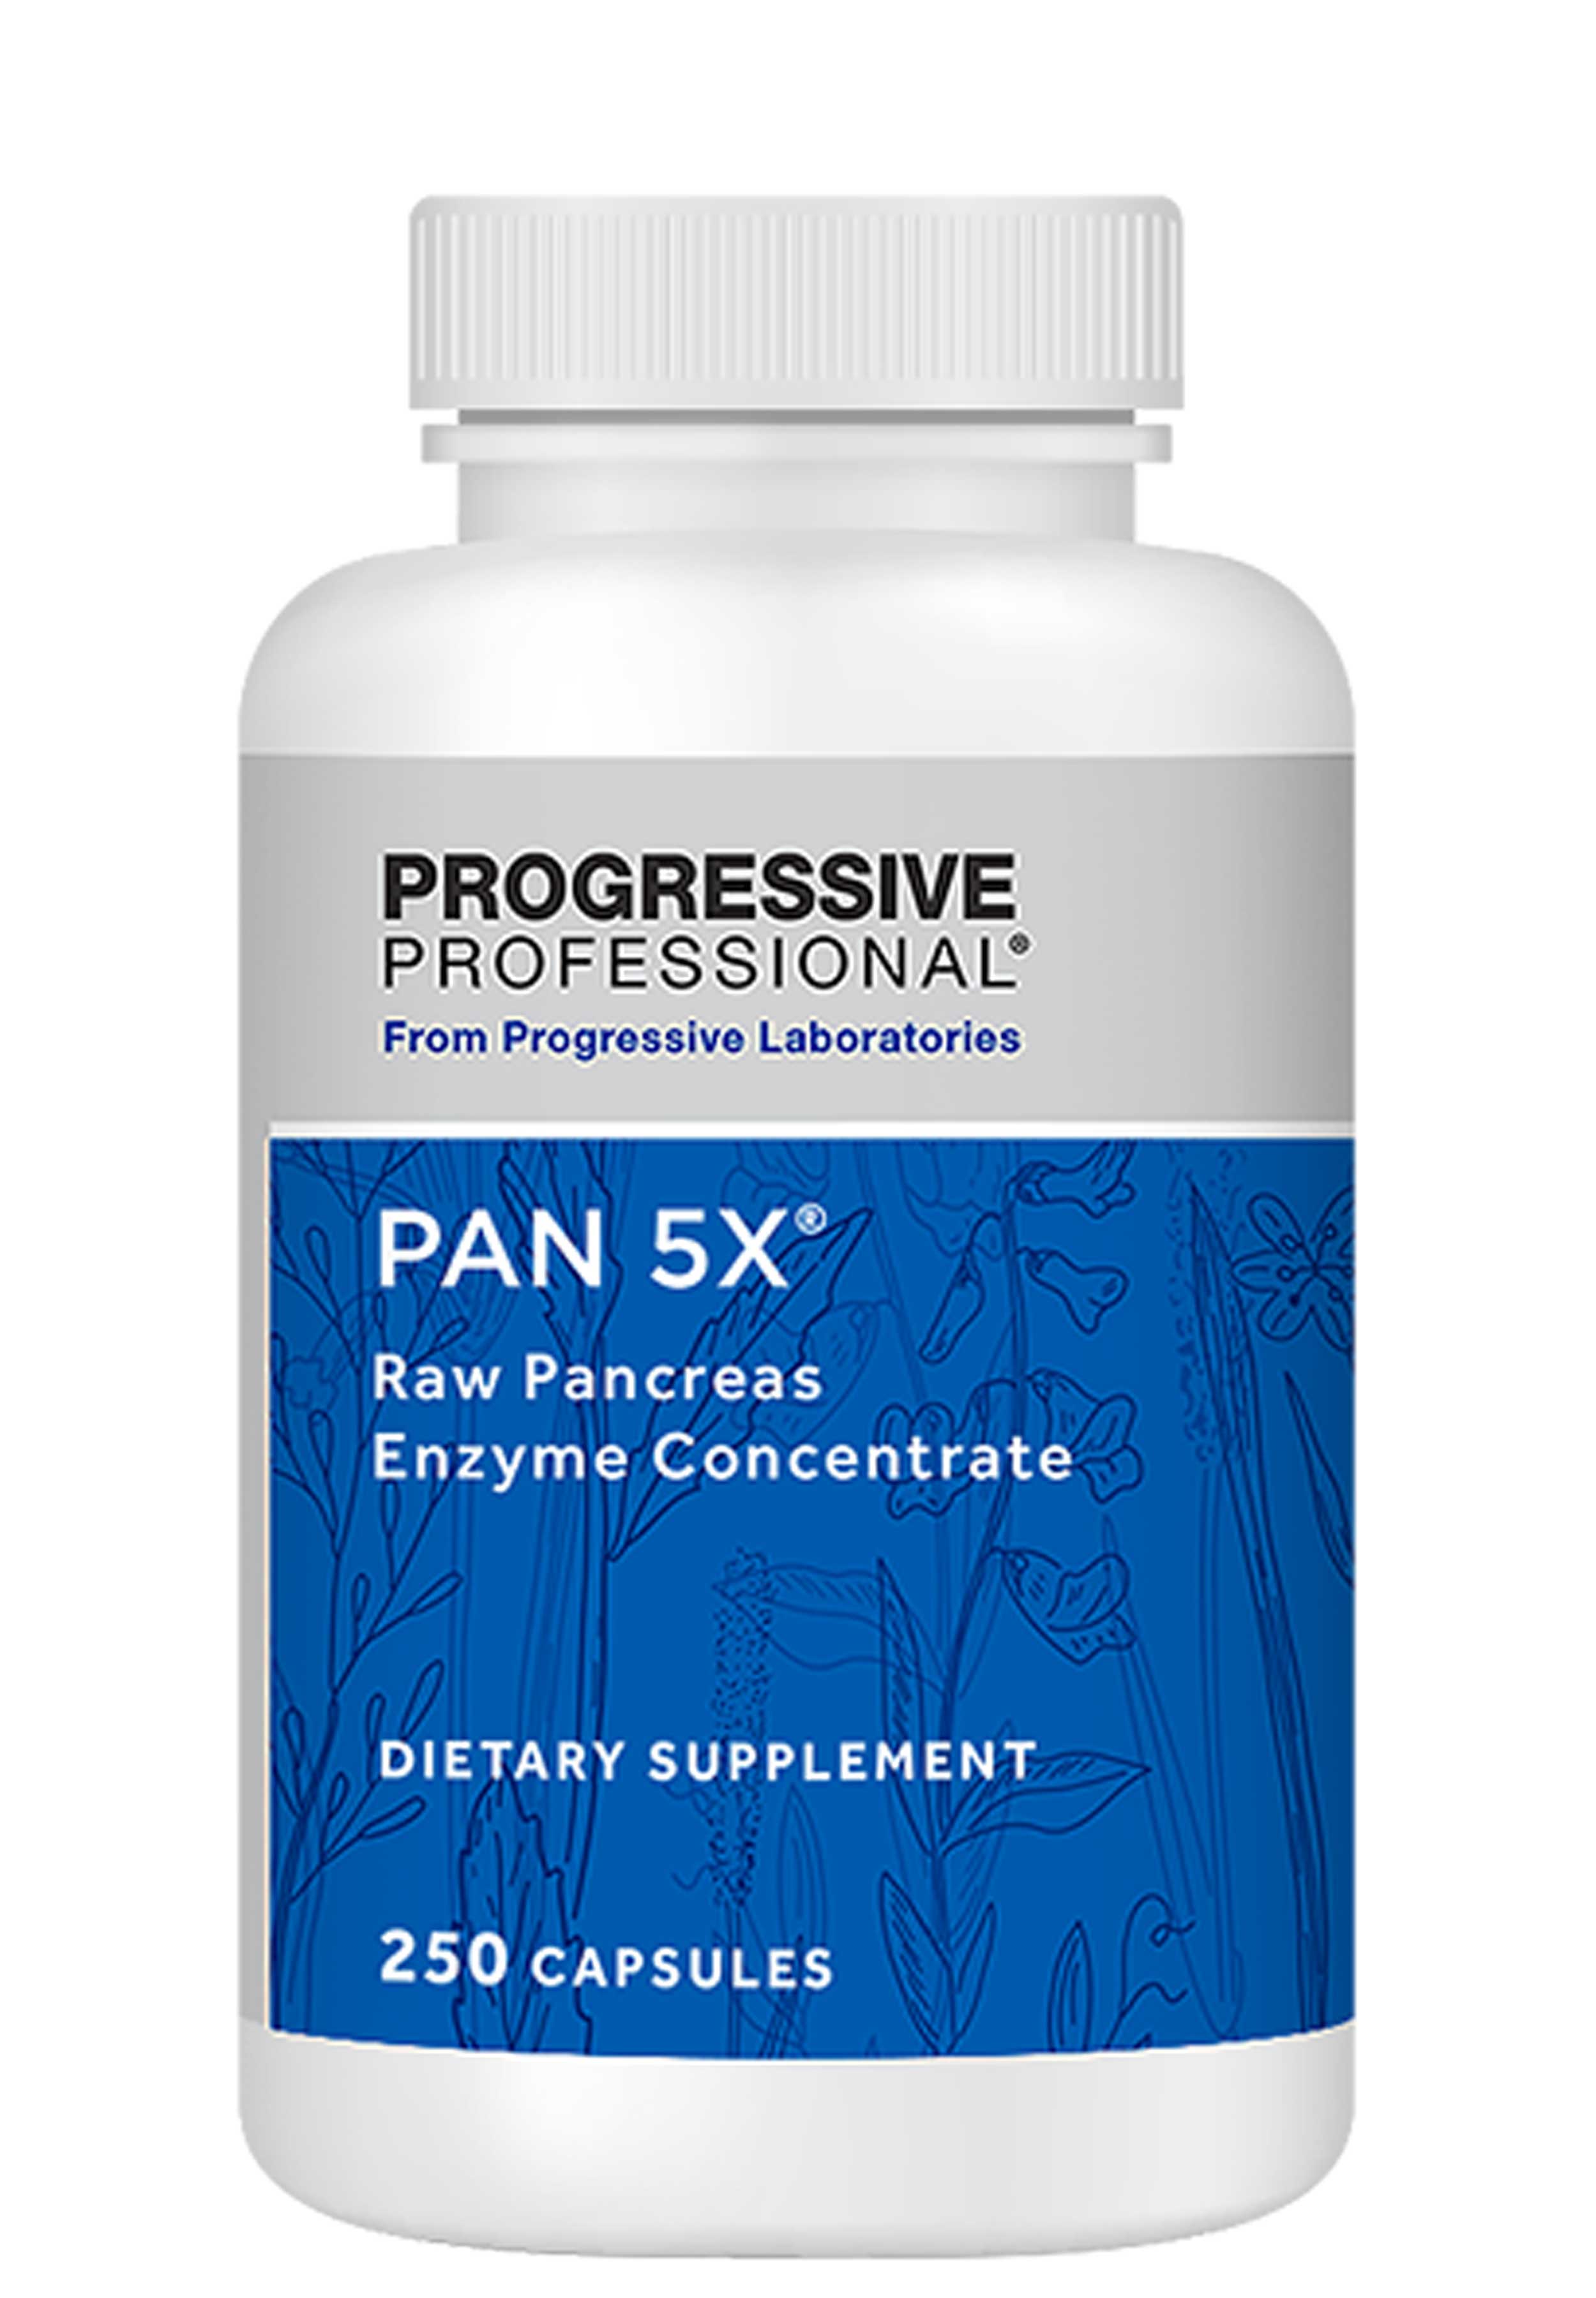 Progressive Laboratories Pan 5x